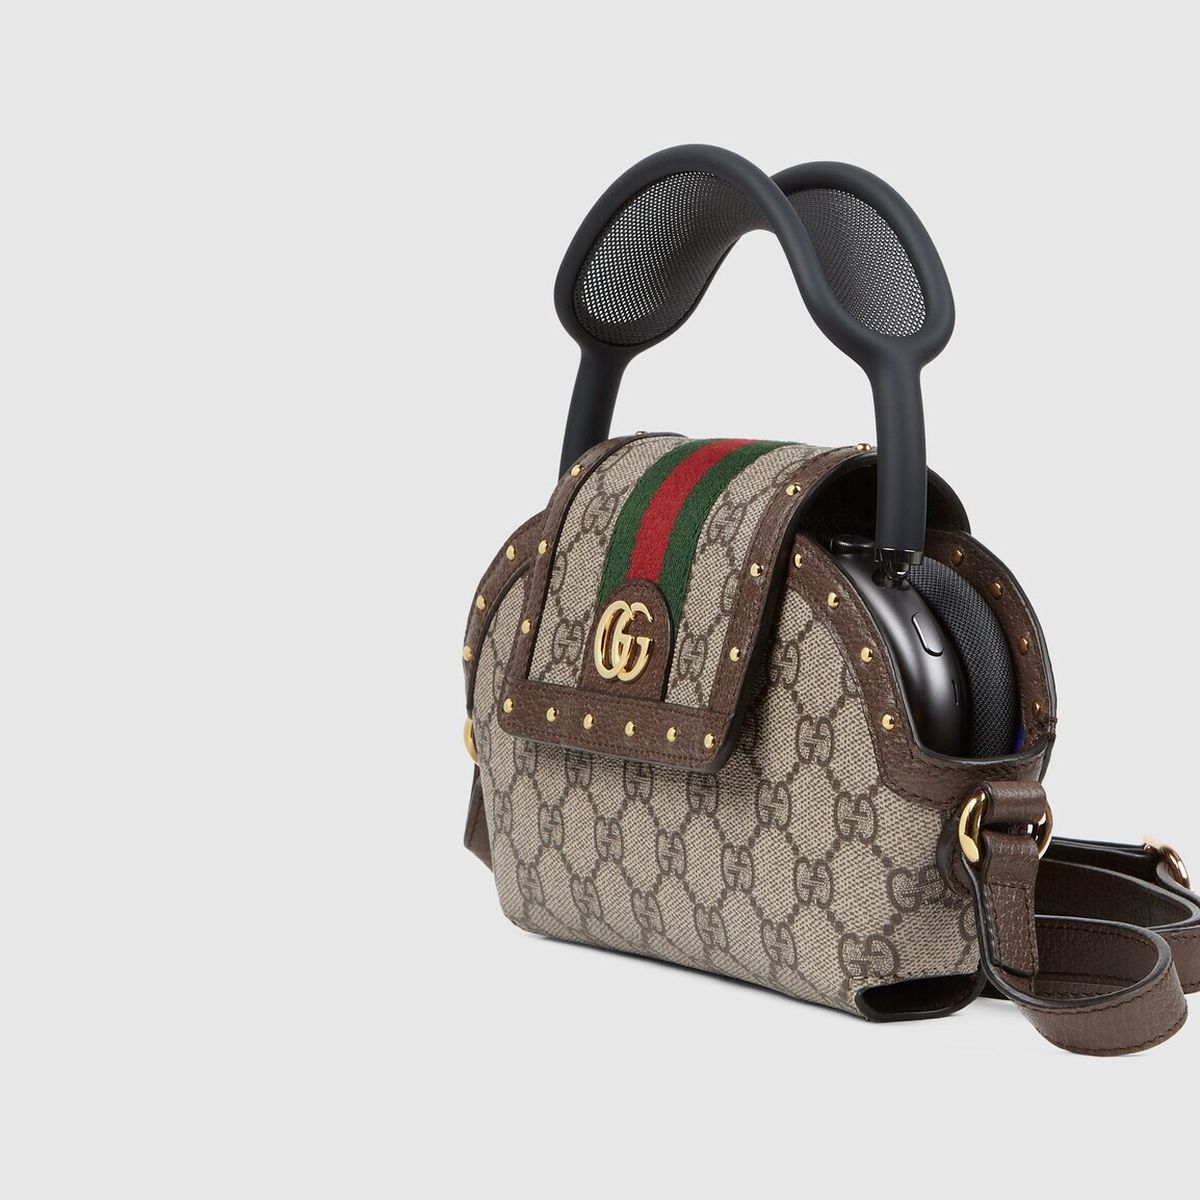 Gucci VS Louis Vuitton (AirPods Pro Case Comparison) 